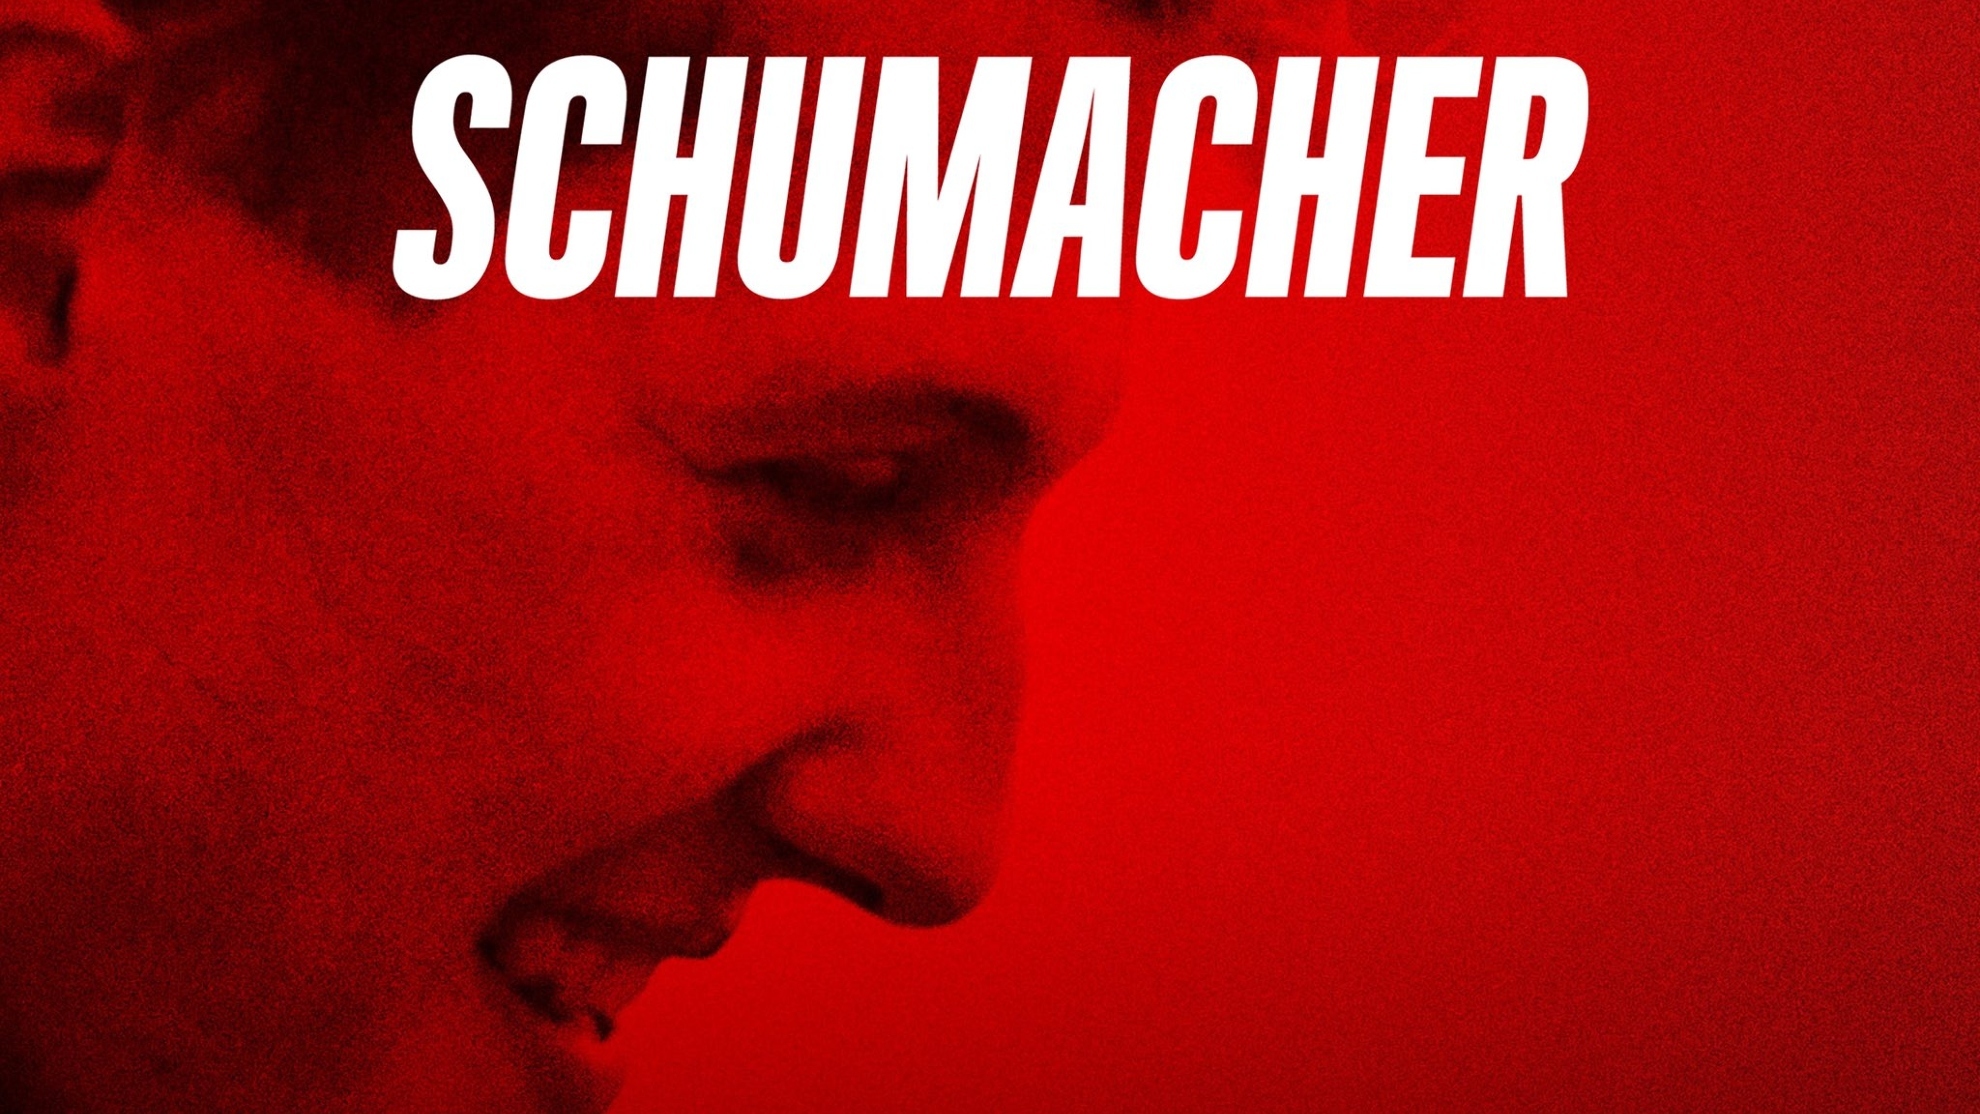 El cartel promocional del documental "Schumacher".